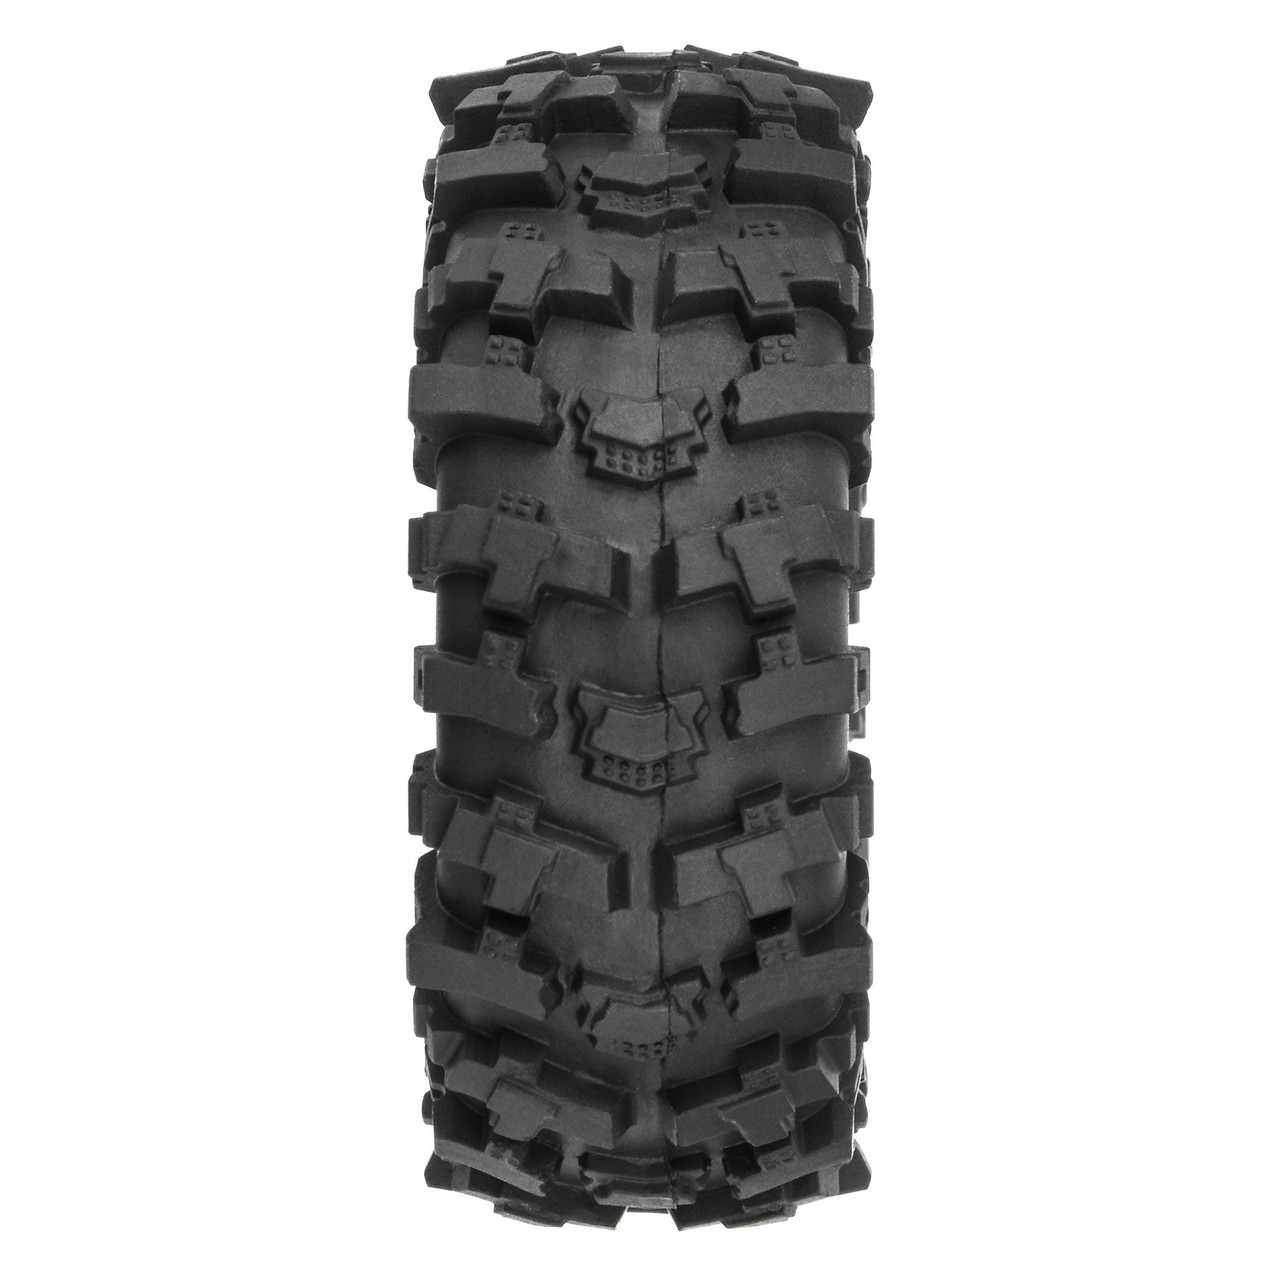 Pro-Line SCX24 1.0" MT Baja Pro X Pre-Mounted Tires (Black) (4) (Medium) w/Holcomb Wheels